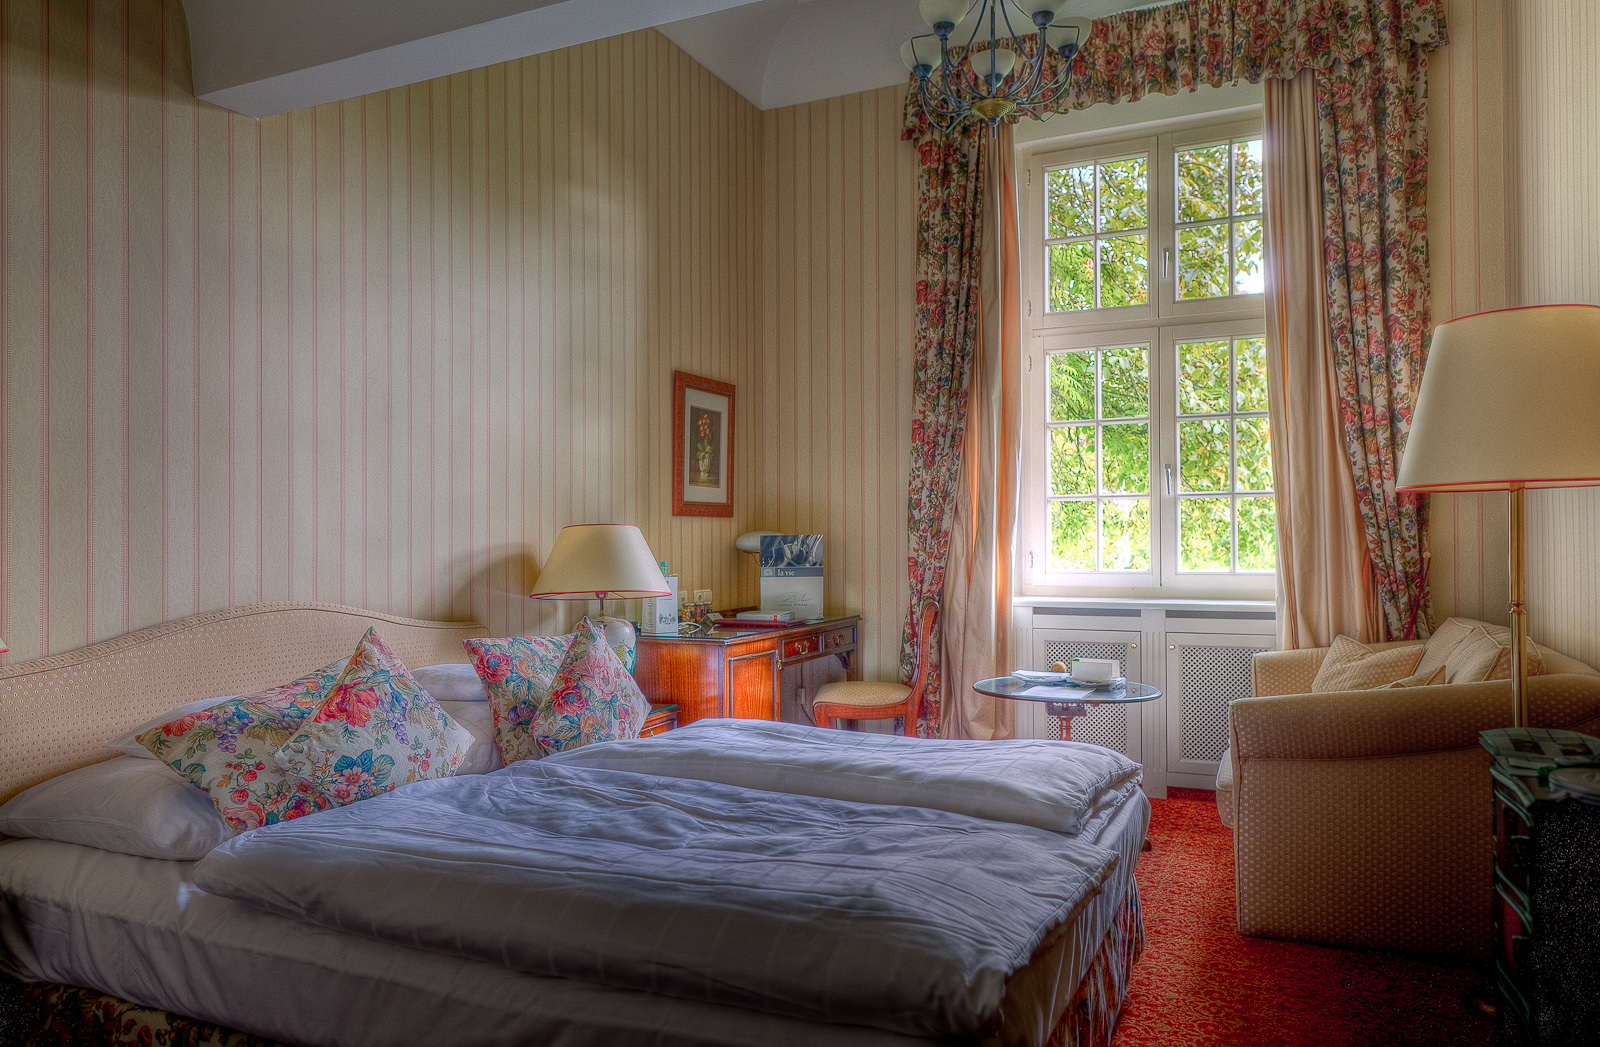 My room at the Schlosshotel Lerbach